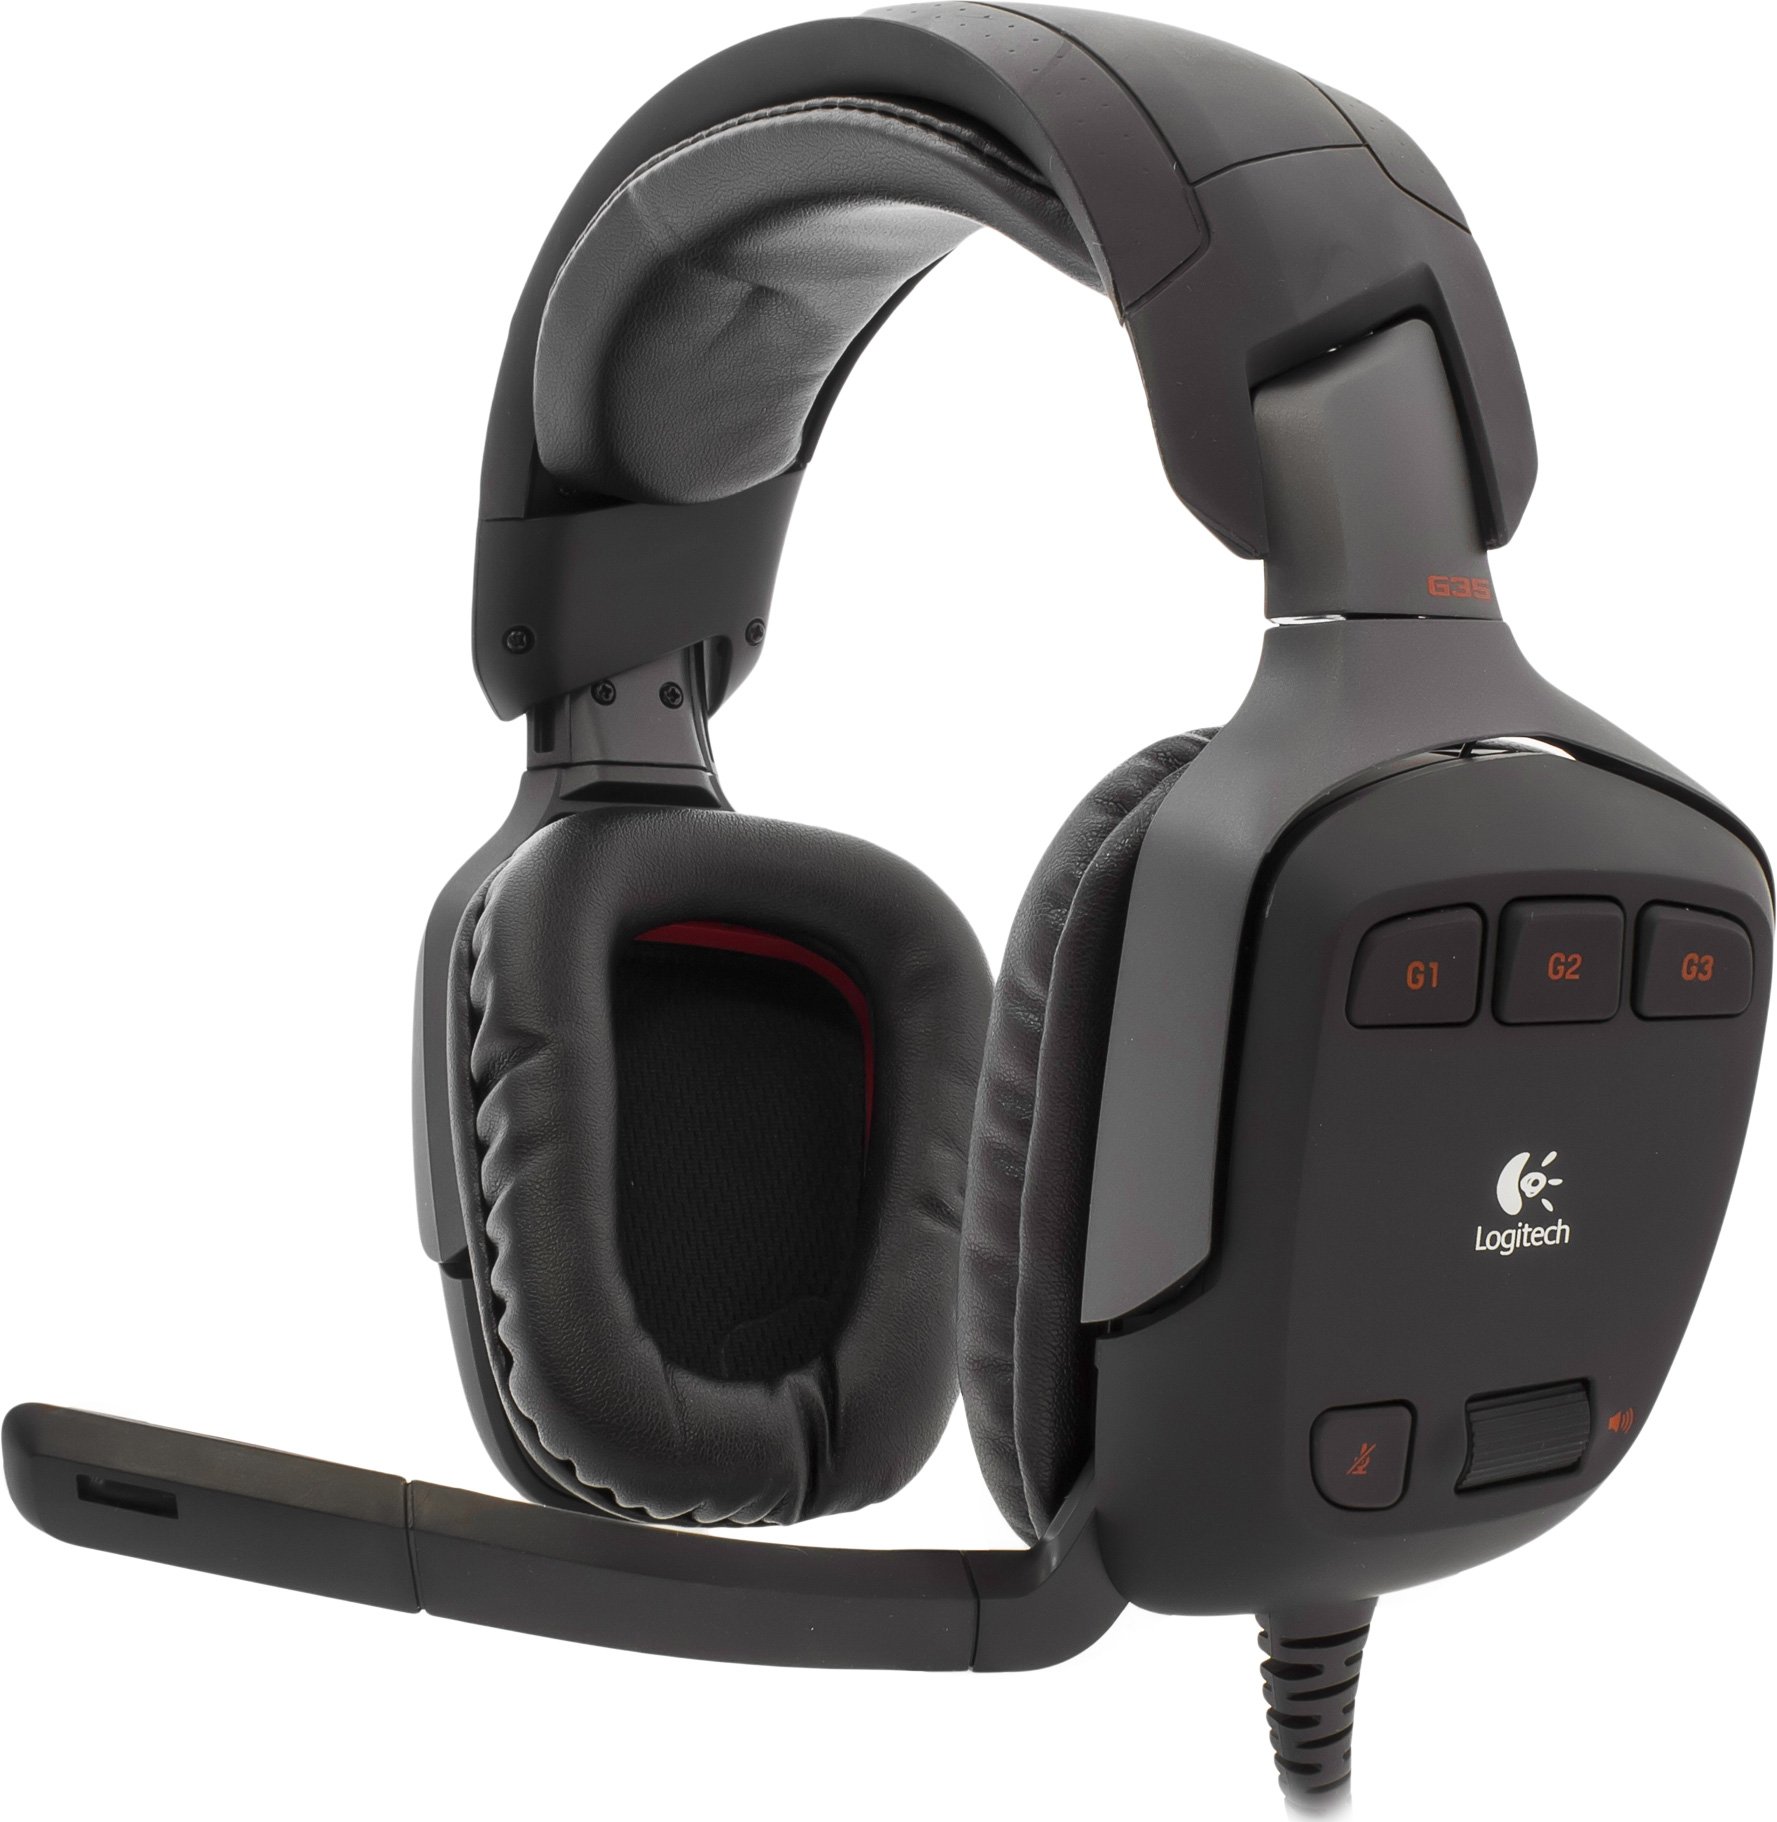 Logitech g headset. Logitech g35 Surround Sound Headset. Наушники логитеч g735. Logitech g35 наушники. Logitech g g35 Surround Sound Headset.